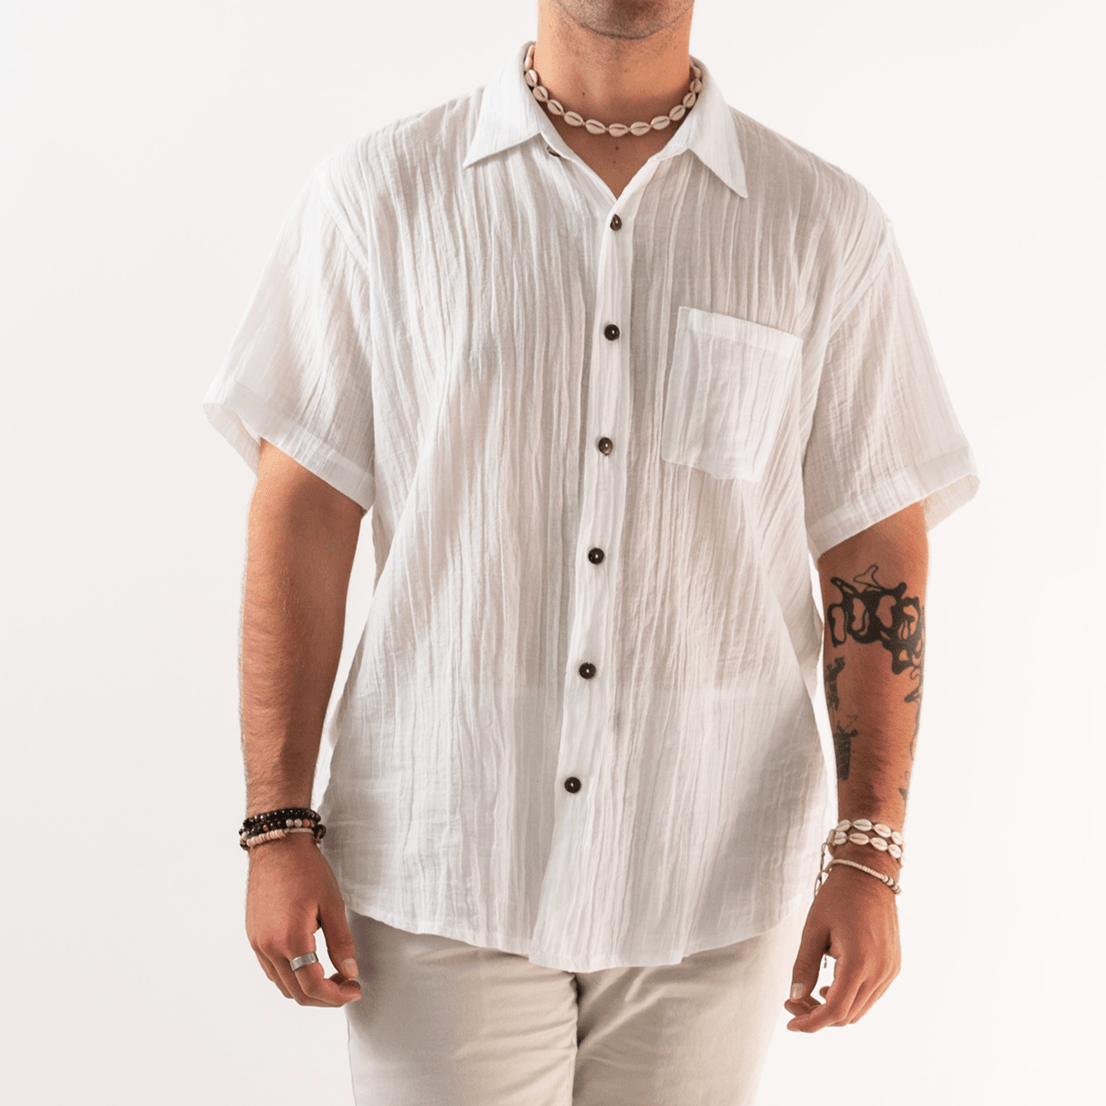 Men's White Cotton Button Up Shirt - LotusAndLuna